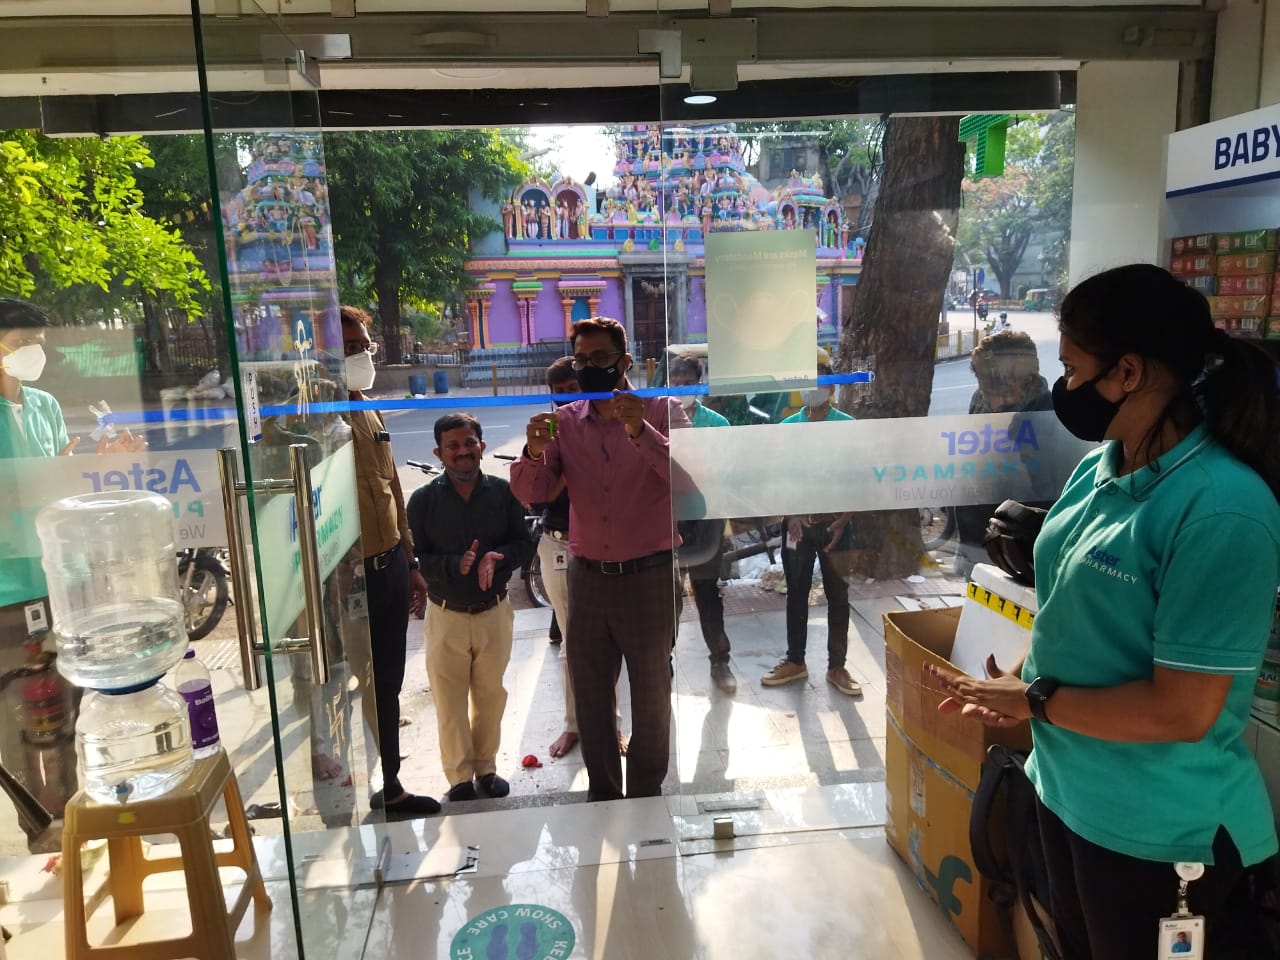 Aster Pharmacy in VV Puram, Bangalore